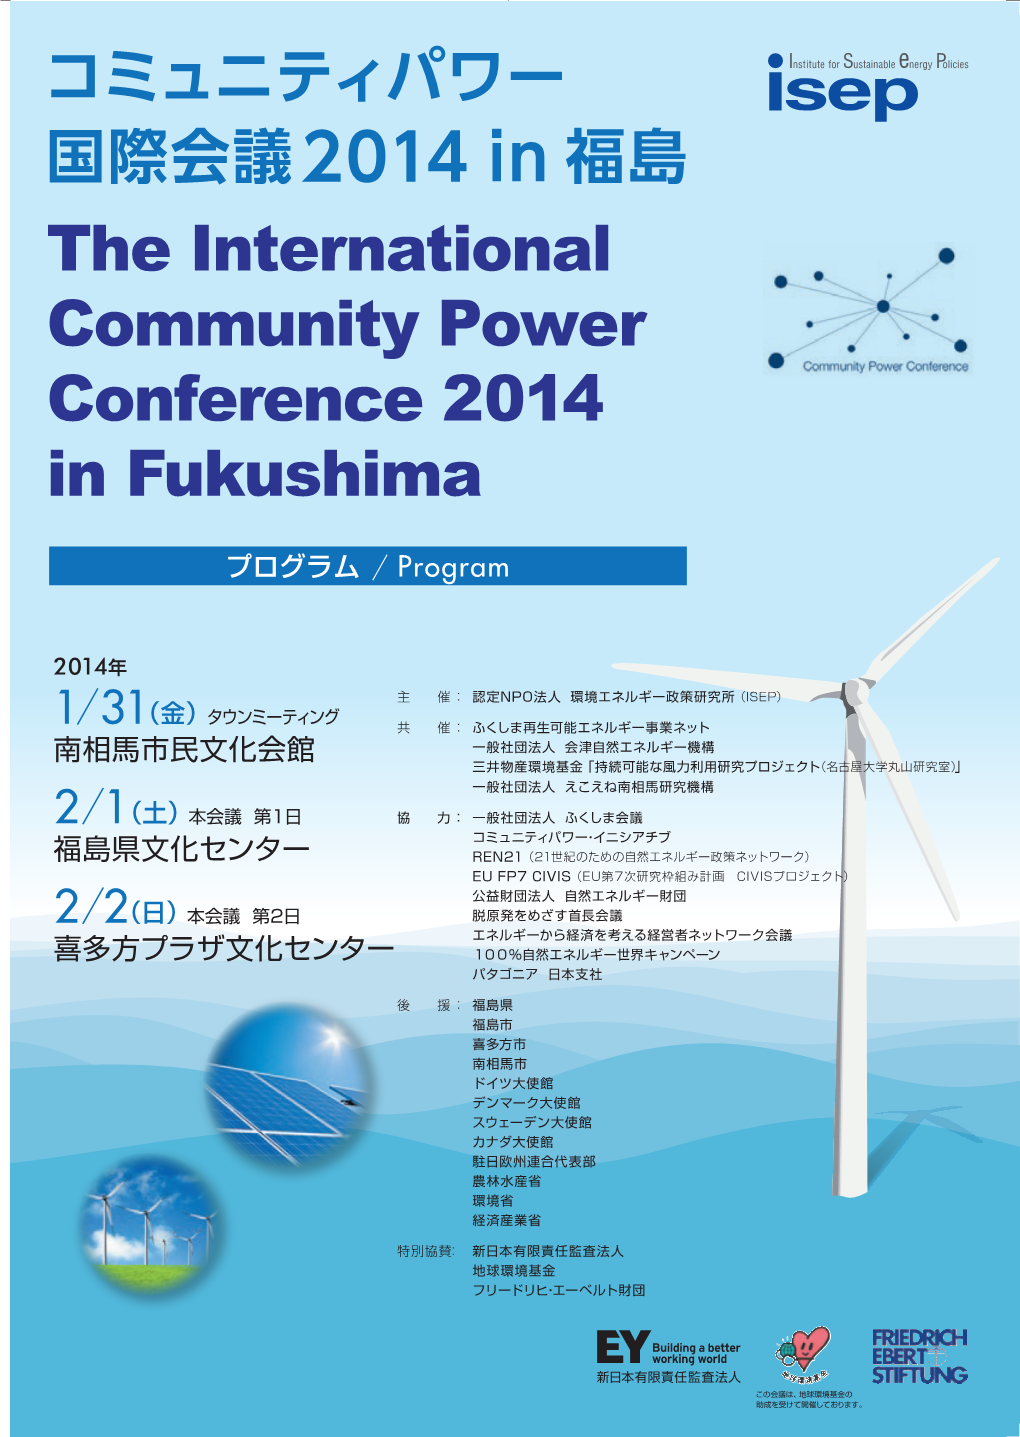 The International Community Power Conference 2014 in Fukushima